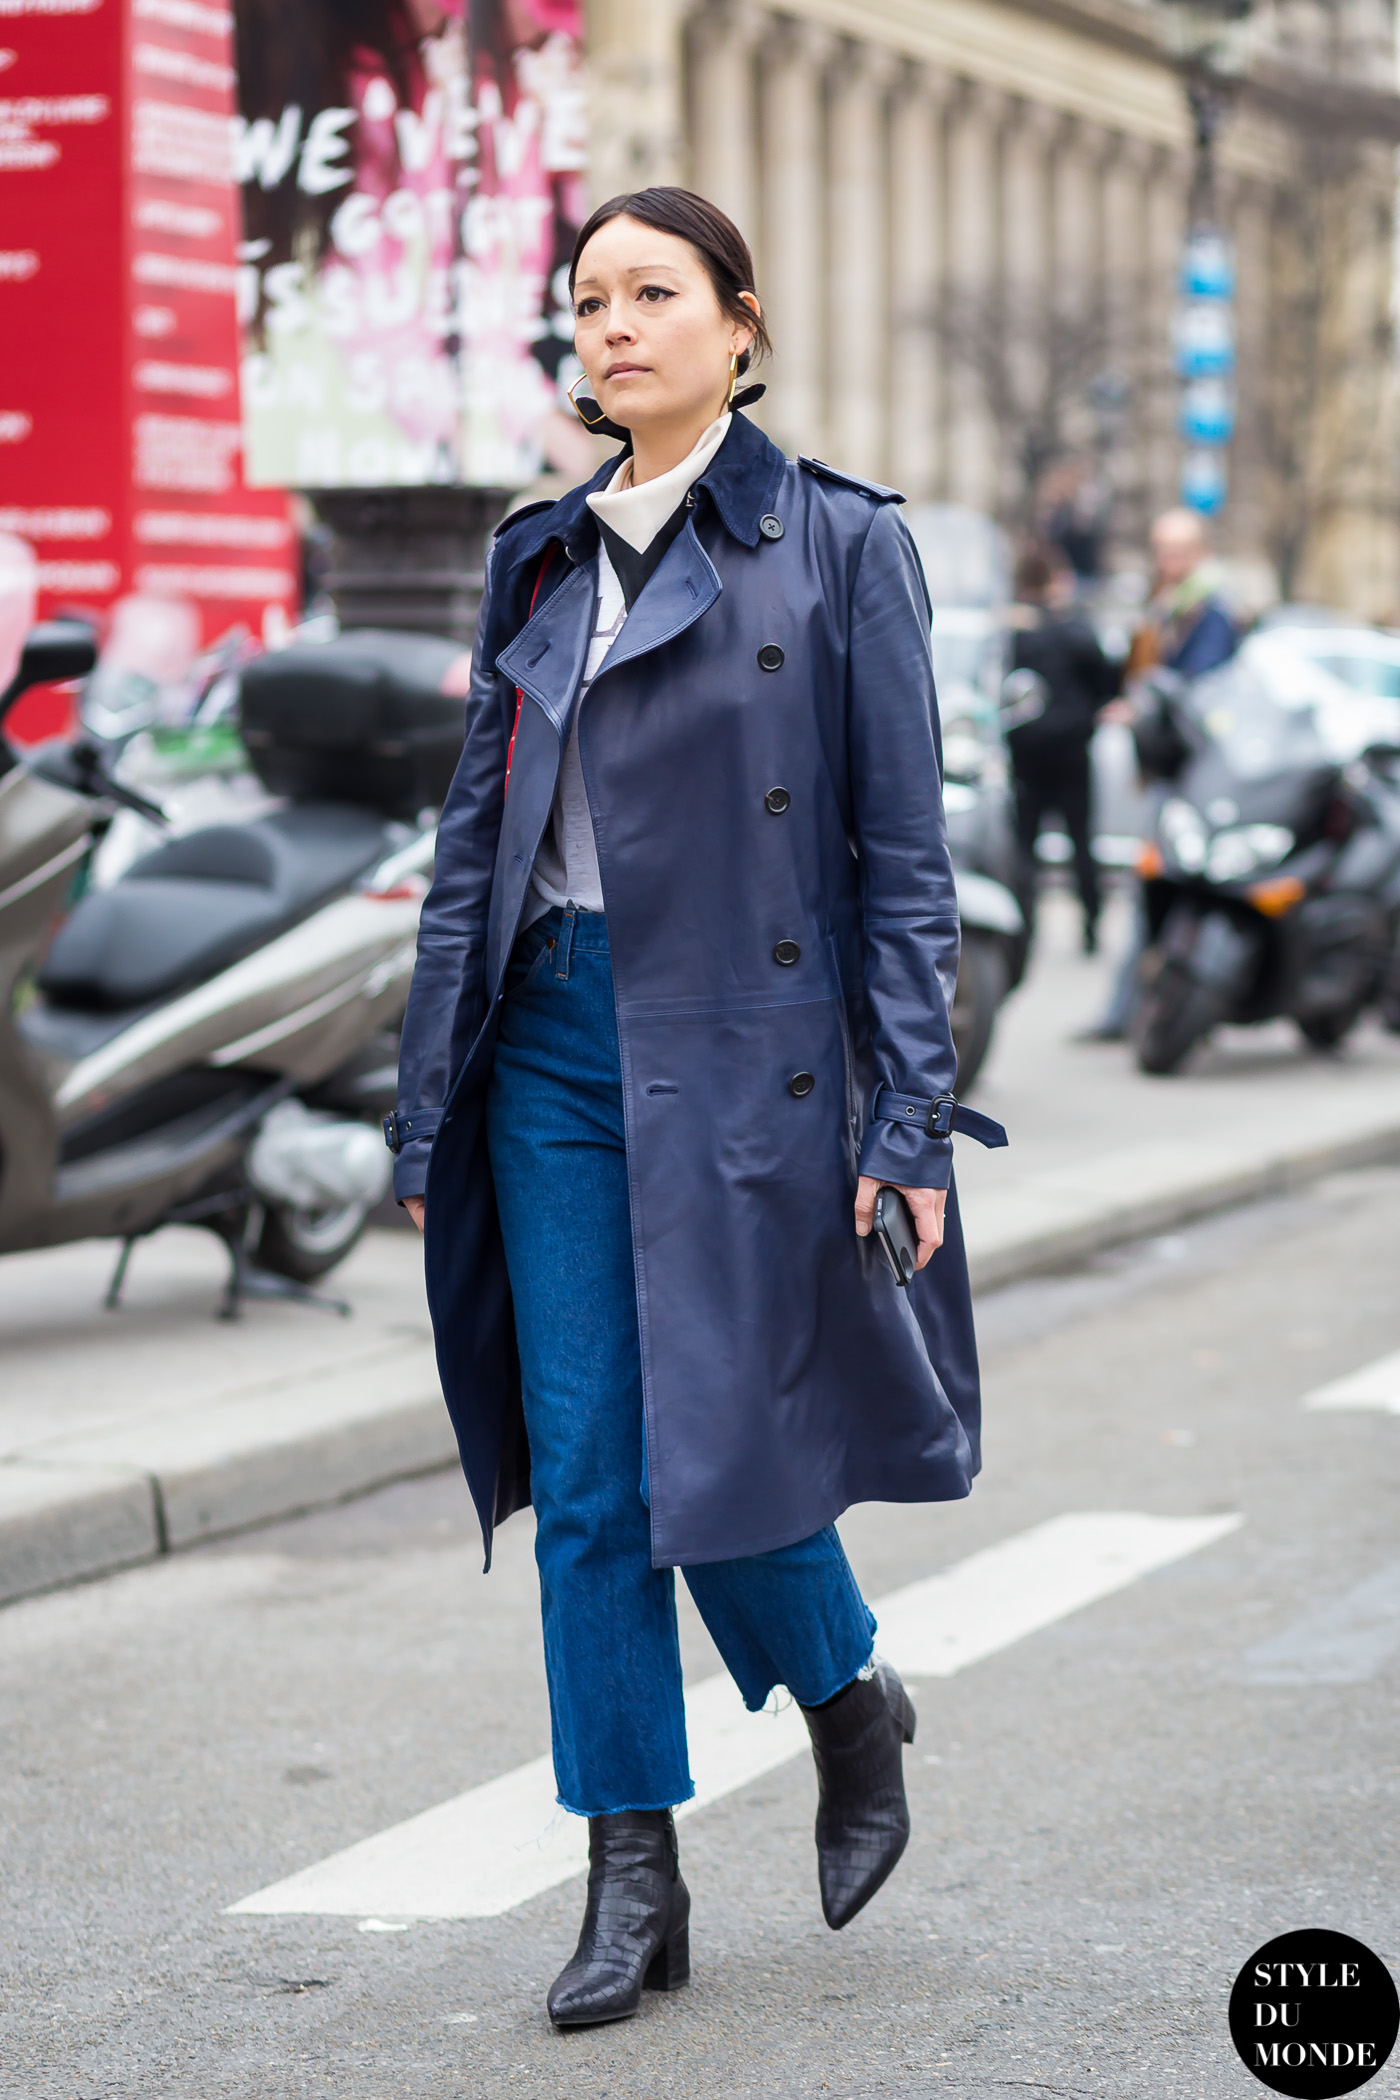 Paris Fashion Week FW 2015 Street Style: Rachael Wang - STYLE DU MONDE ...